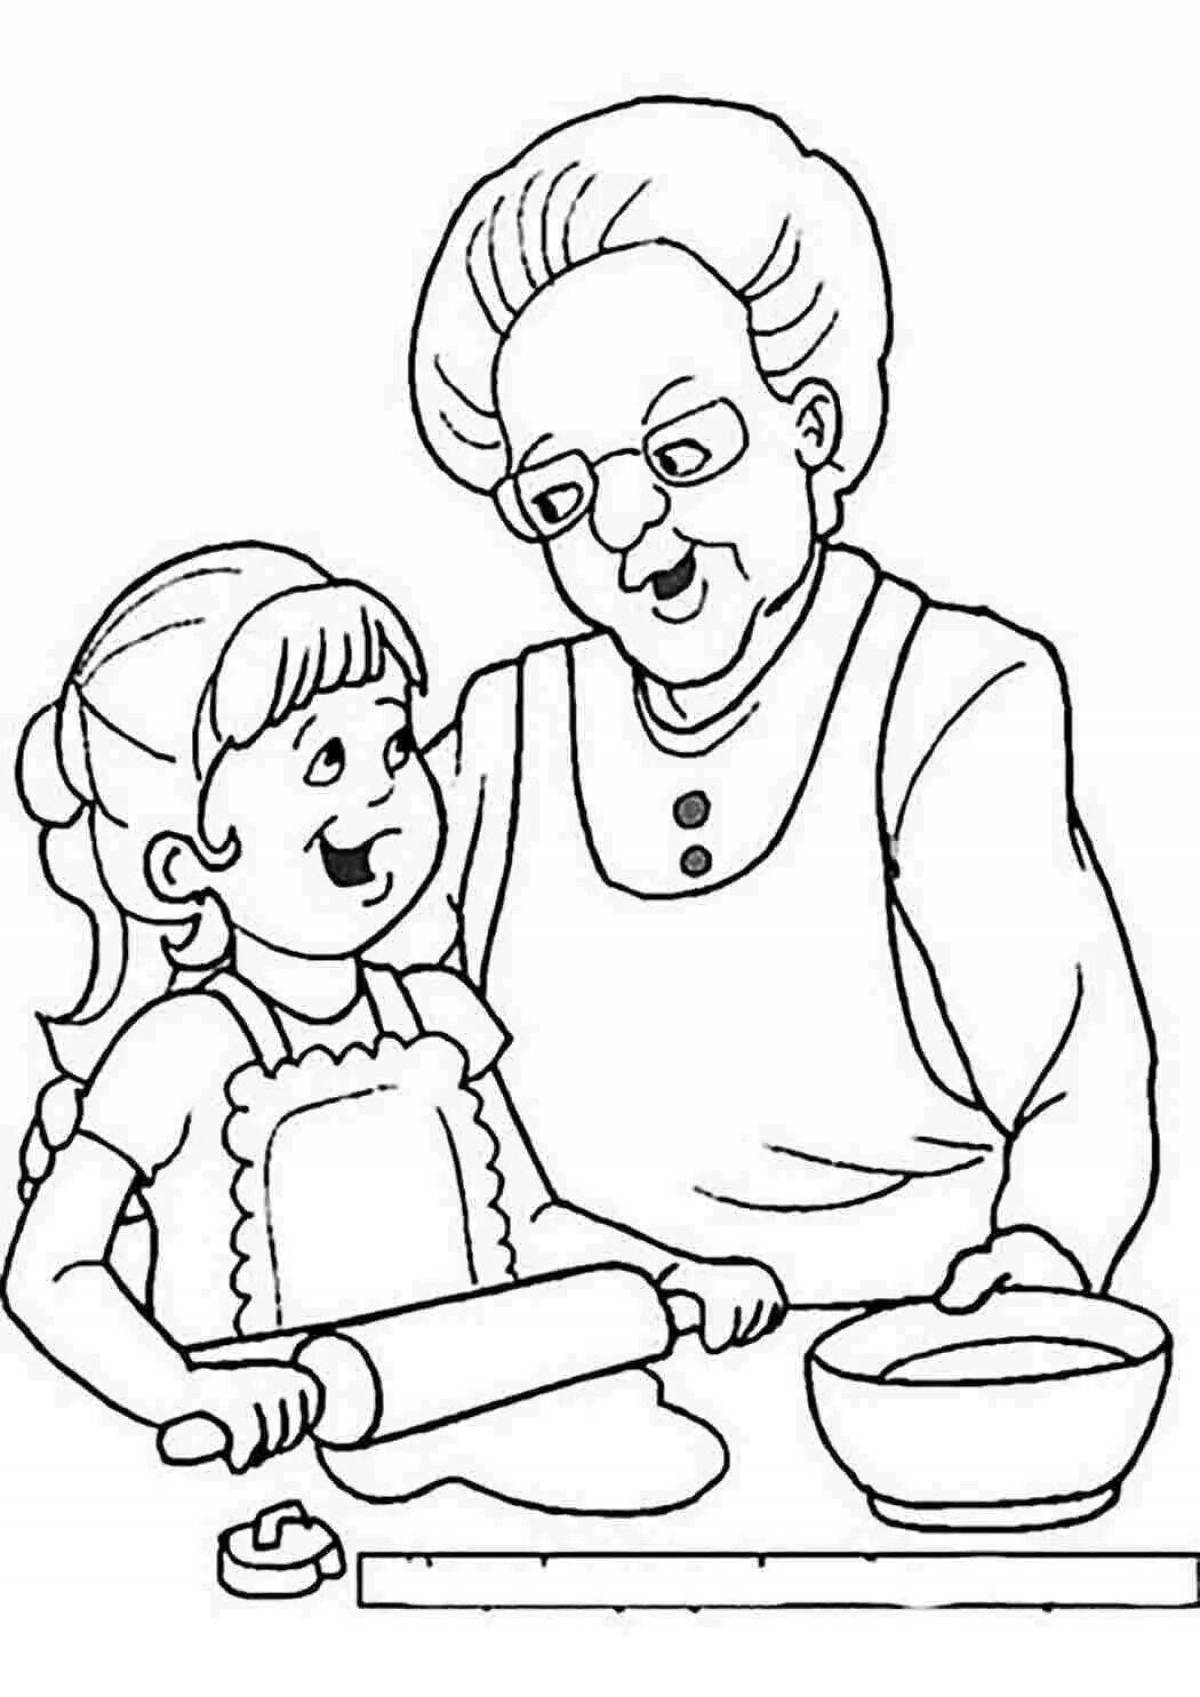 Wonderful grandmother and granddaughter coloring book